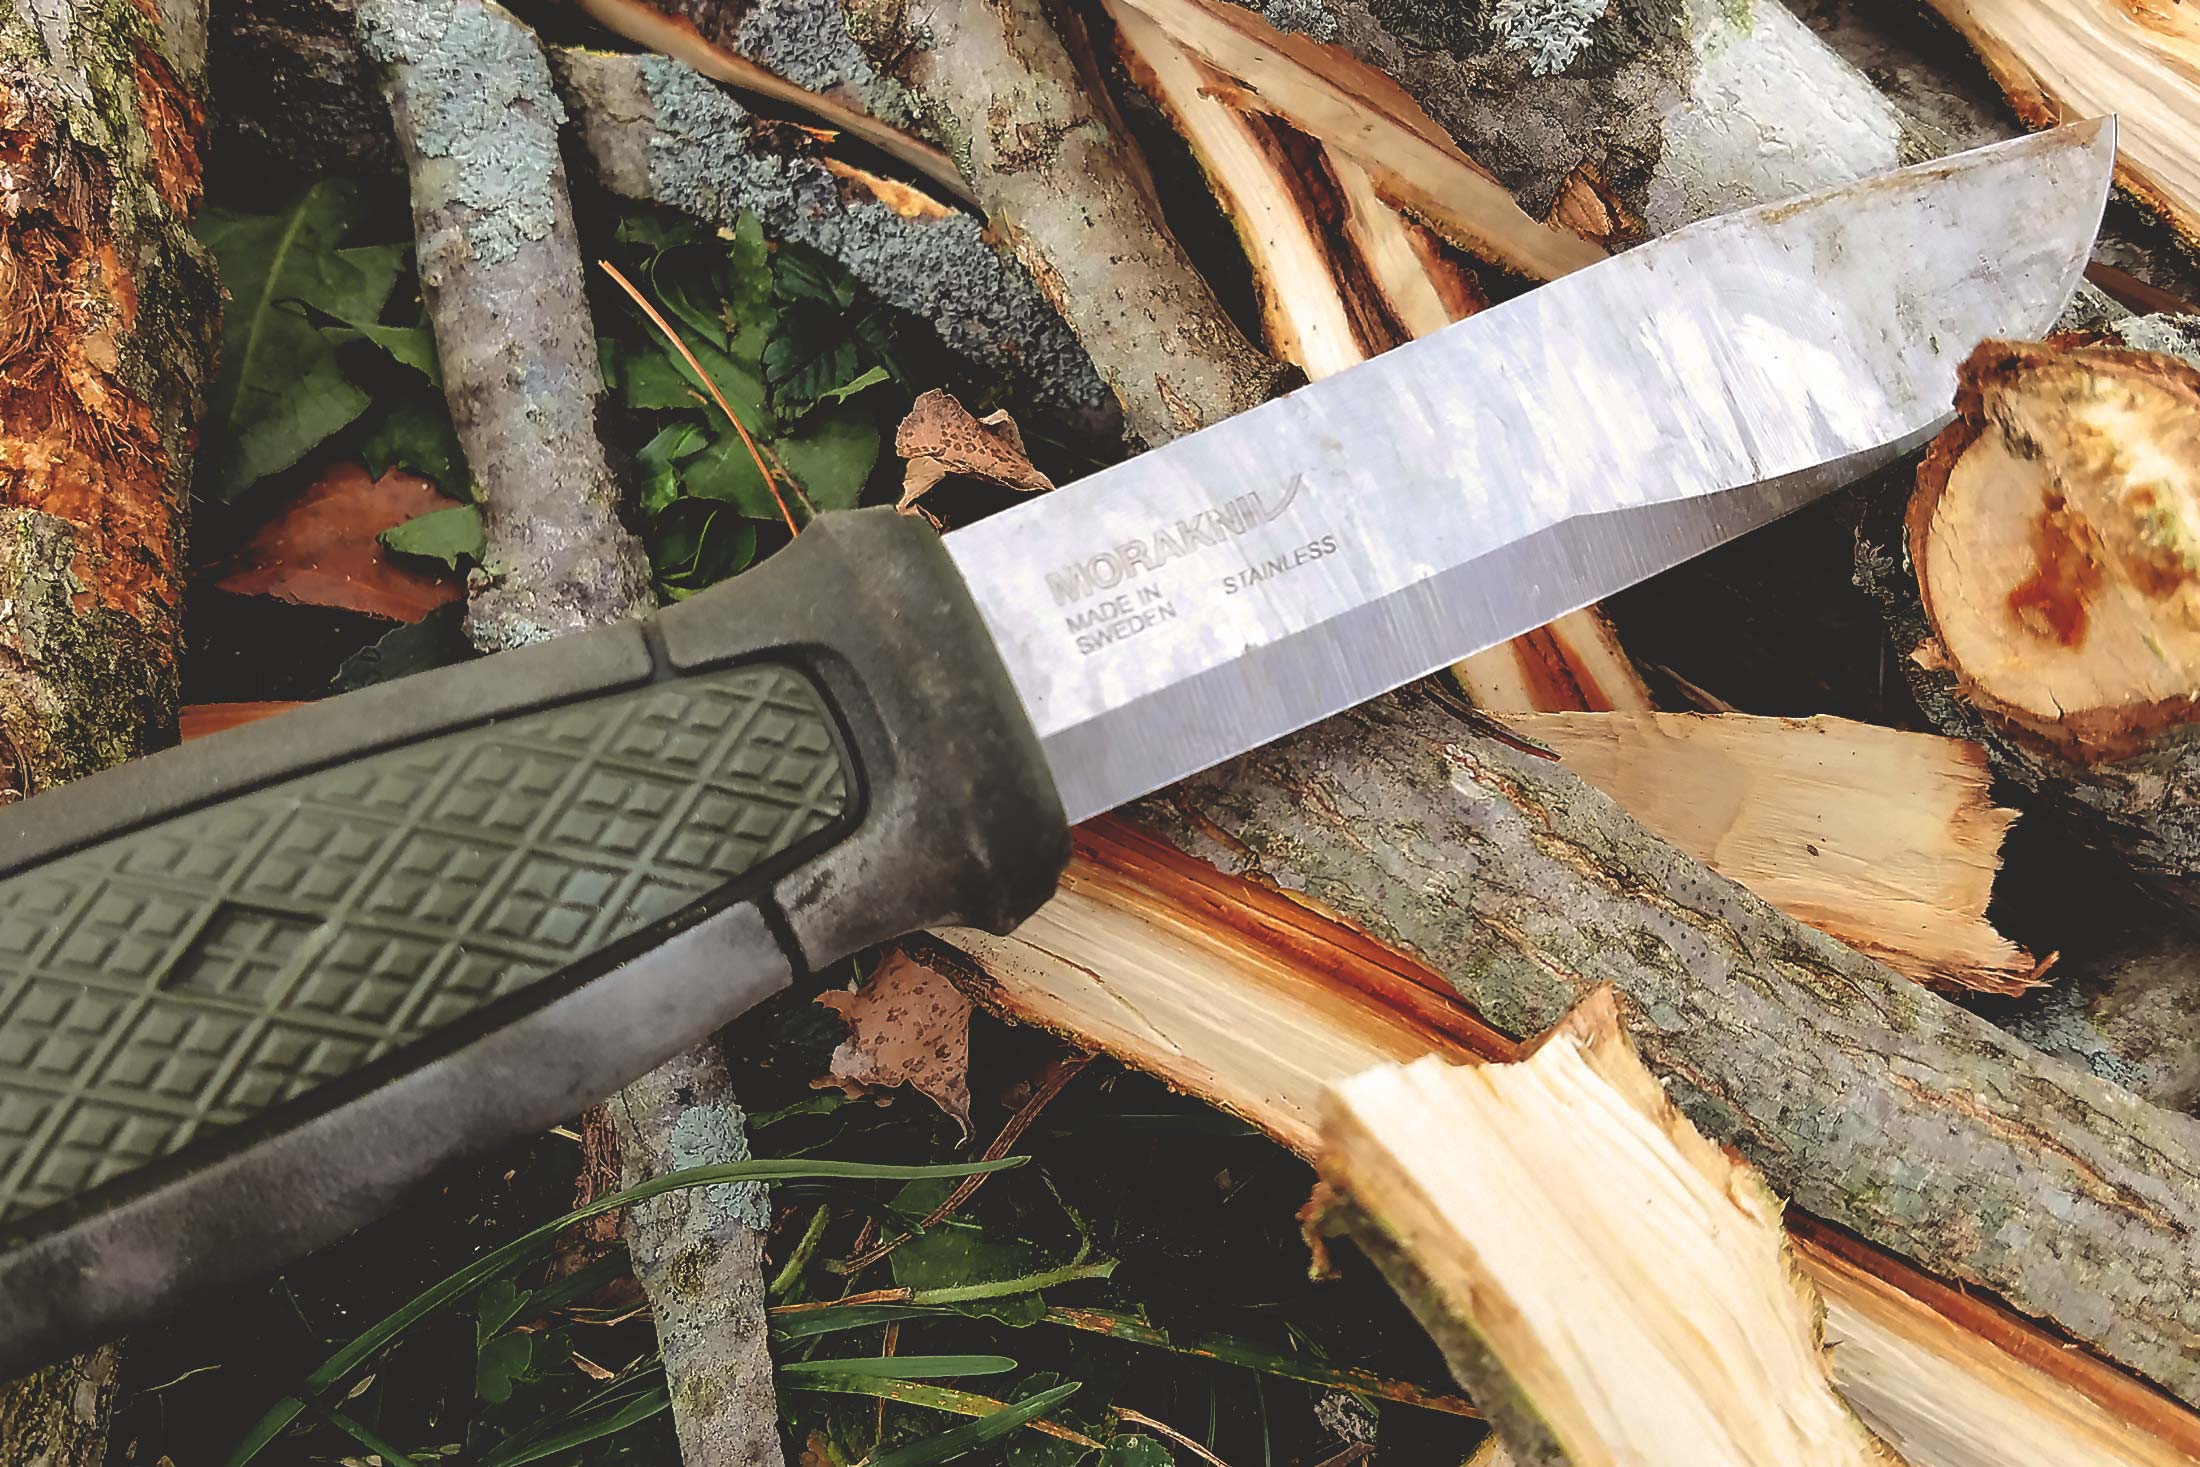 Mora Bushcraft Survival Knife Review